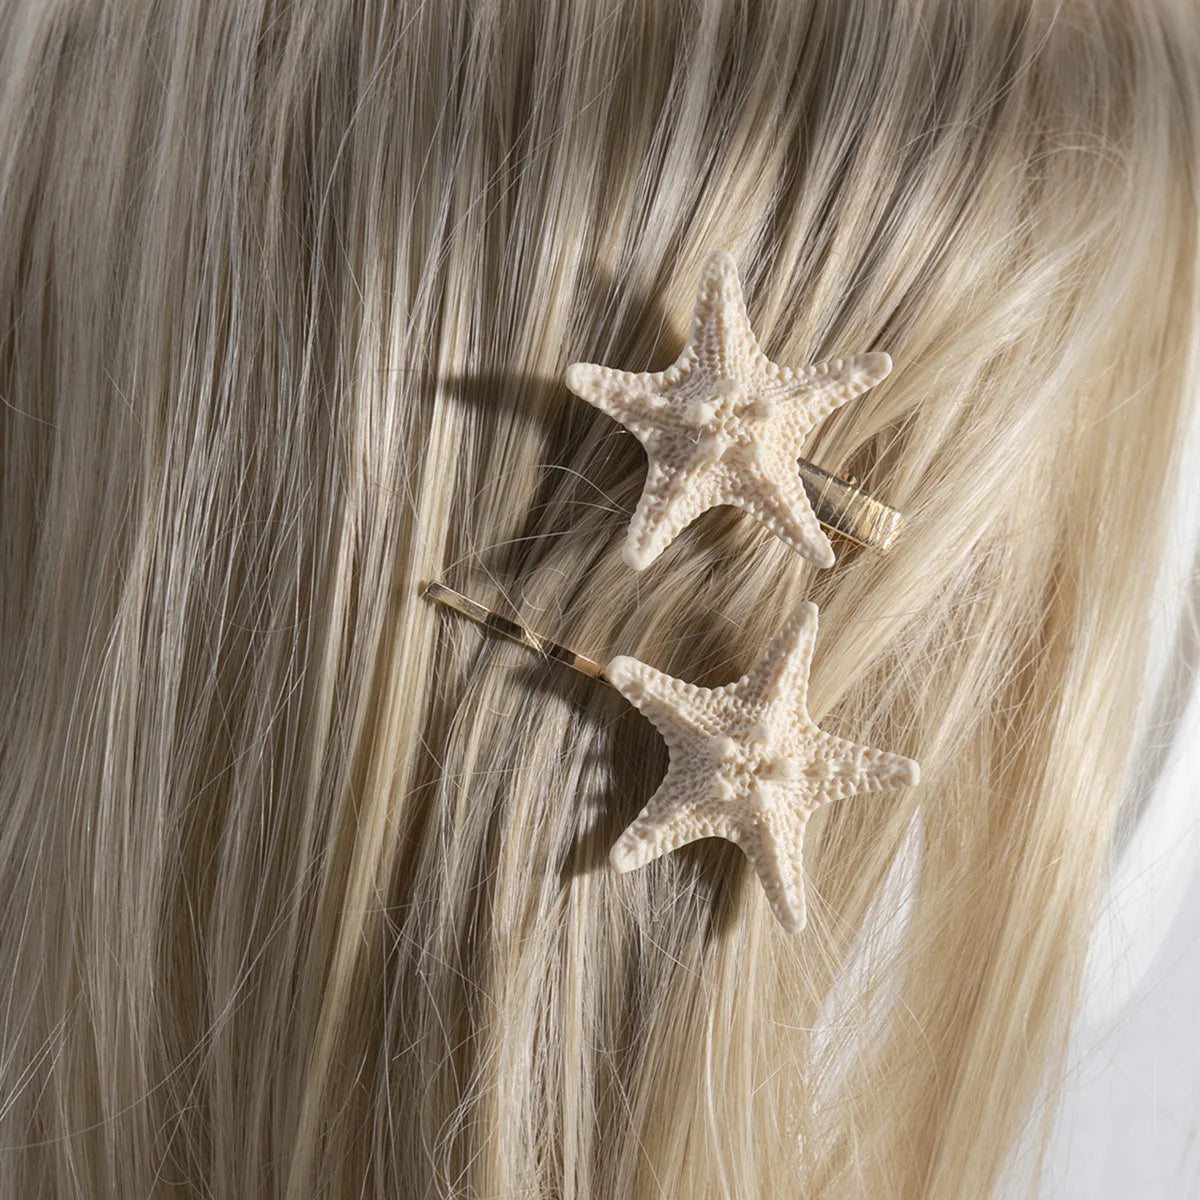 2PCS Starfish Sea Star Hairpin Natural Elegant Hair Clip Hairgrips Headwear Headdress Jewelry For Women Girls Hair Accessories